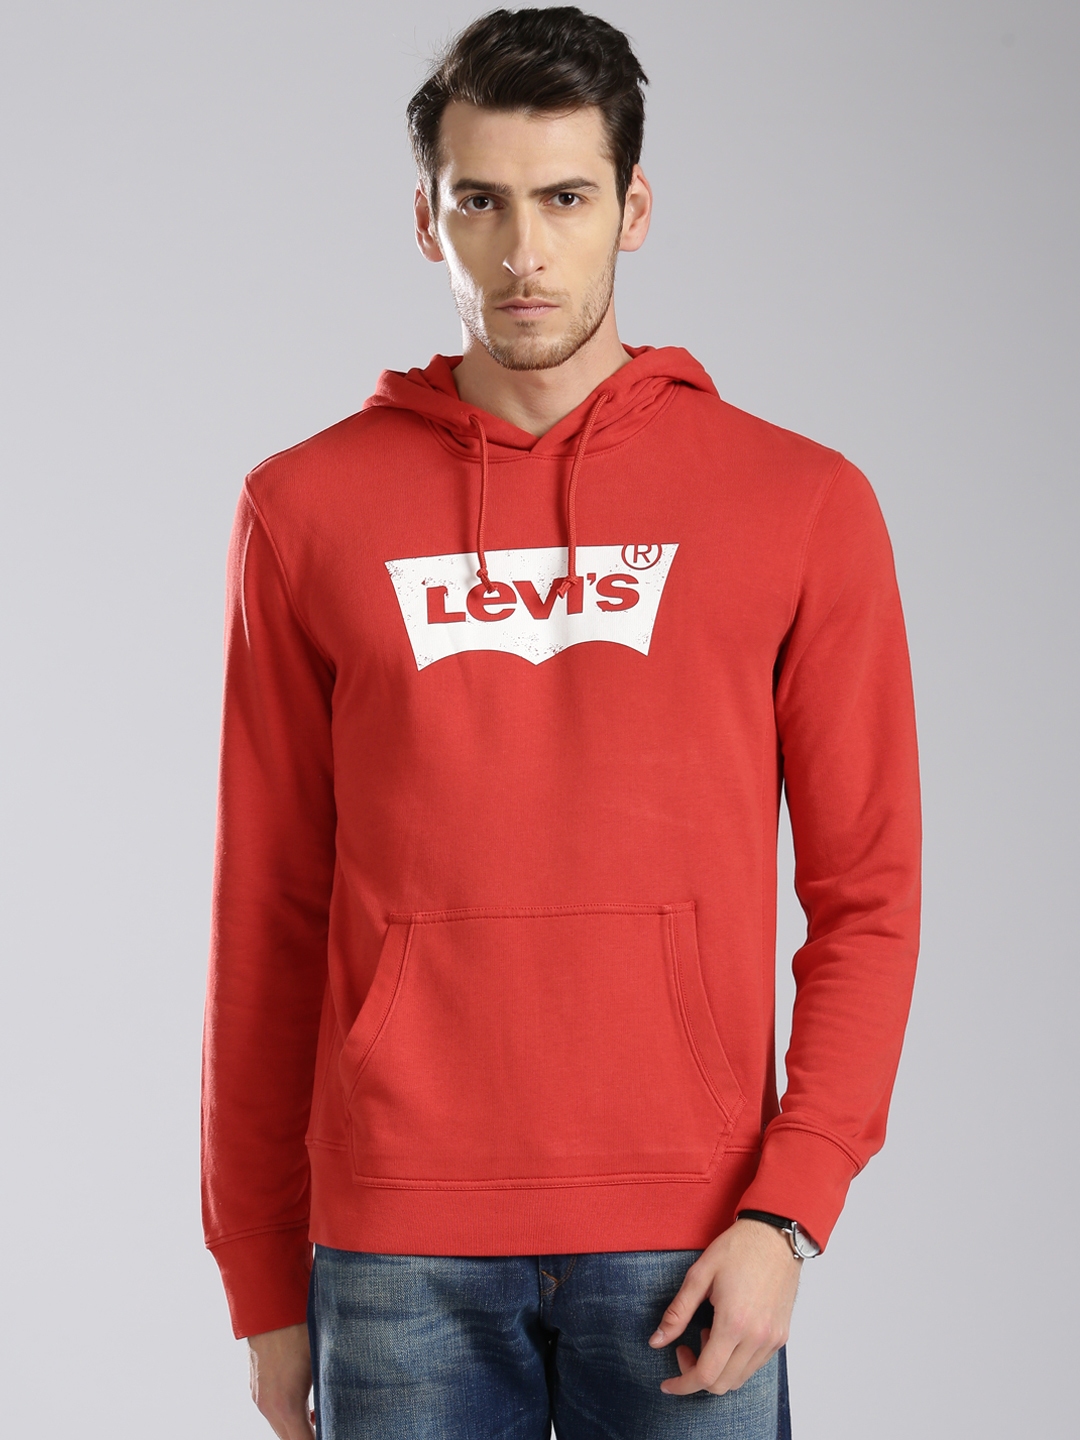 Buy Levis Men Red Printed Hooded Sweatshirt - Sweatshirts for Men 2451930 |  Myntra